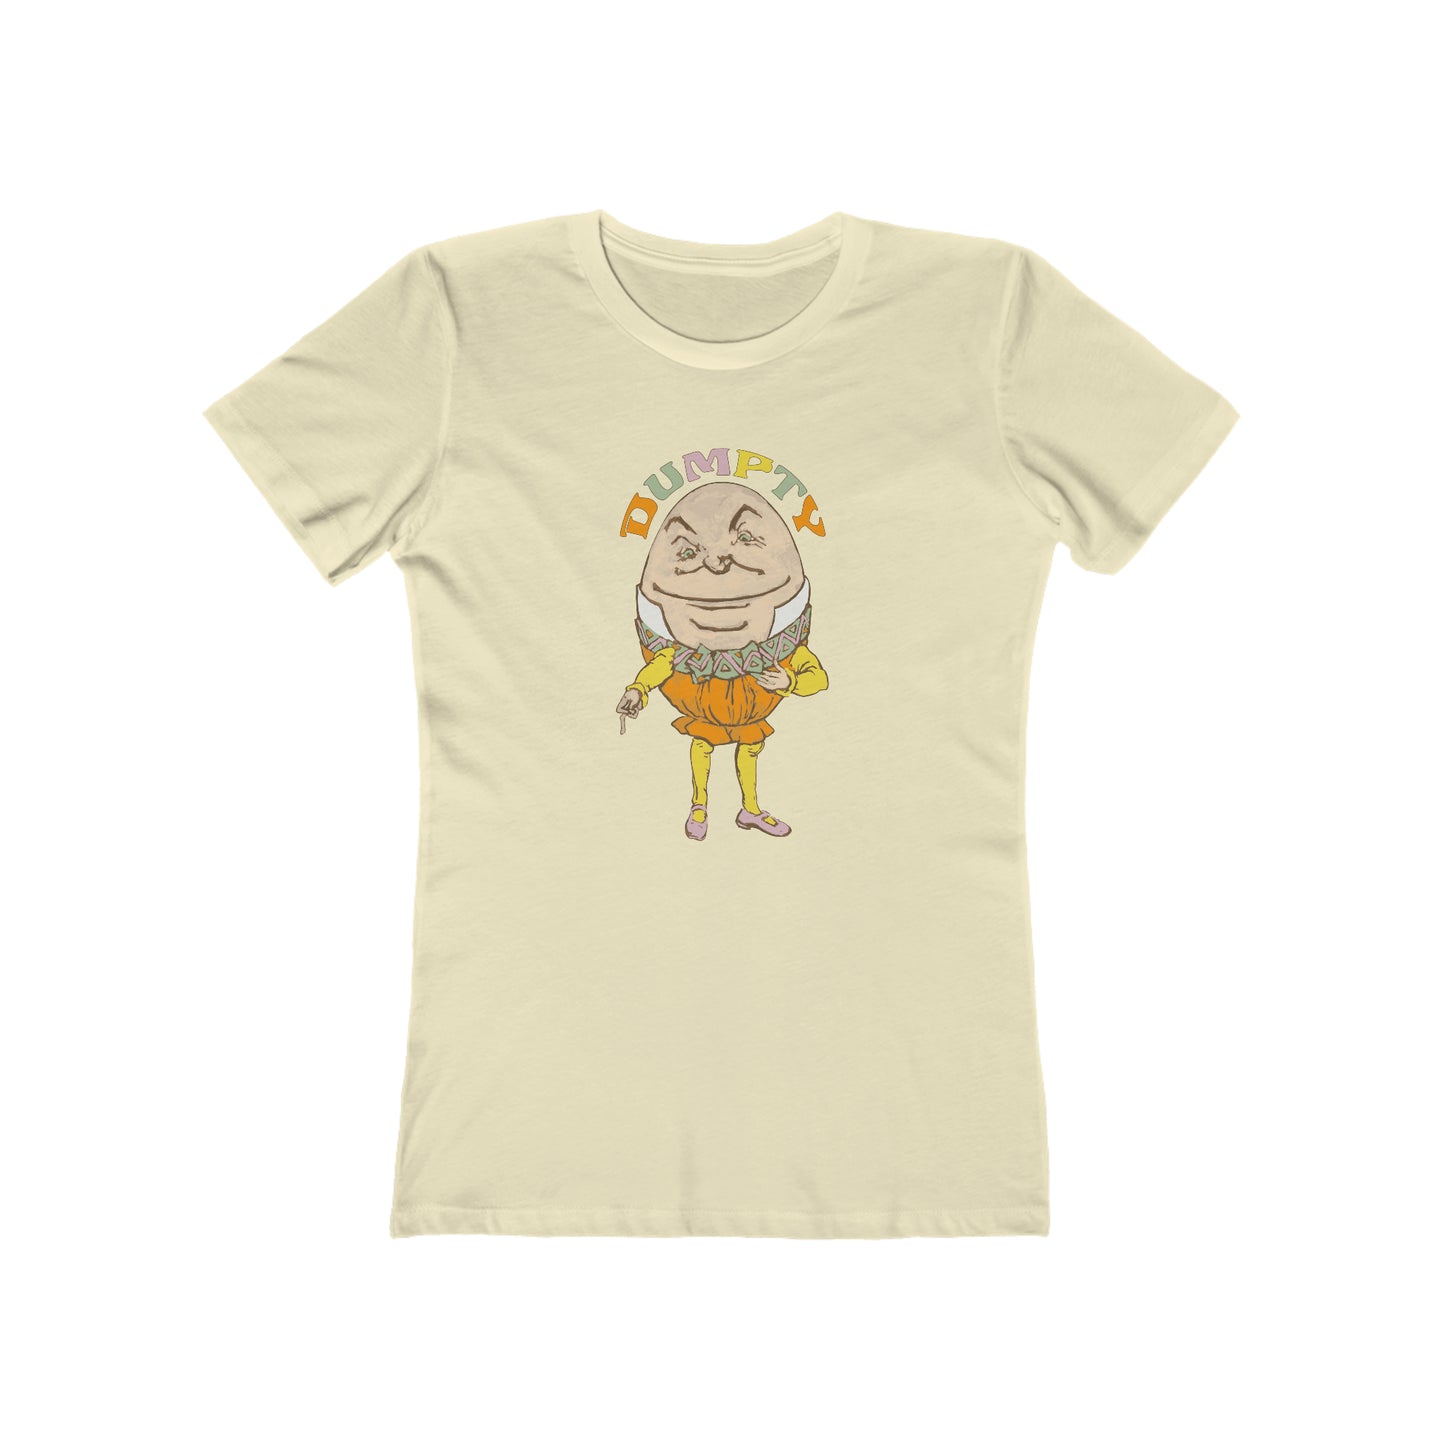 Dumpty - Women's T-Shirt